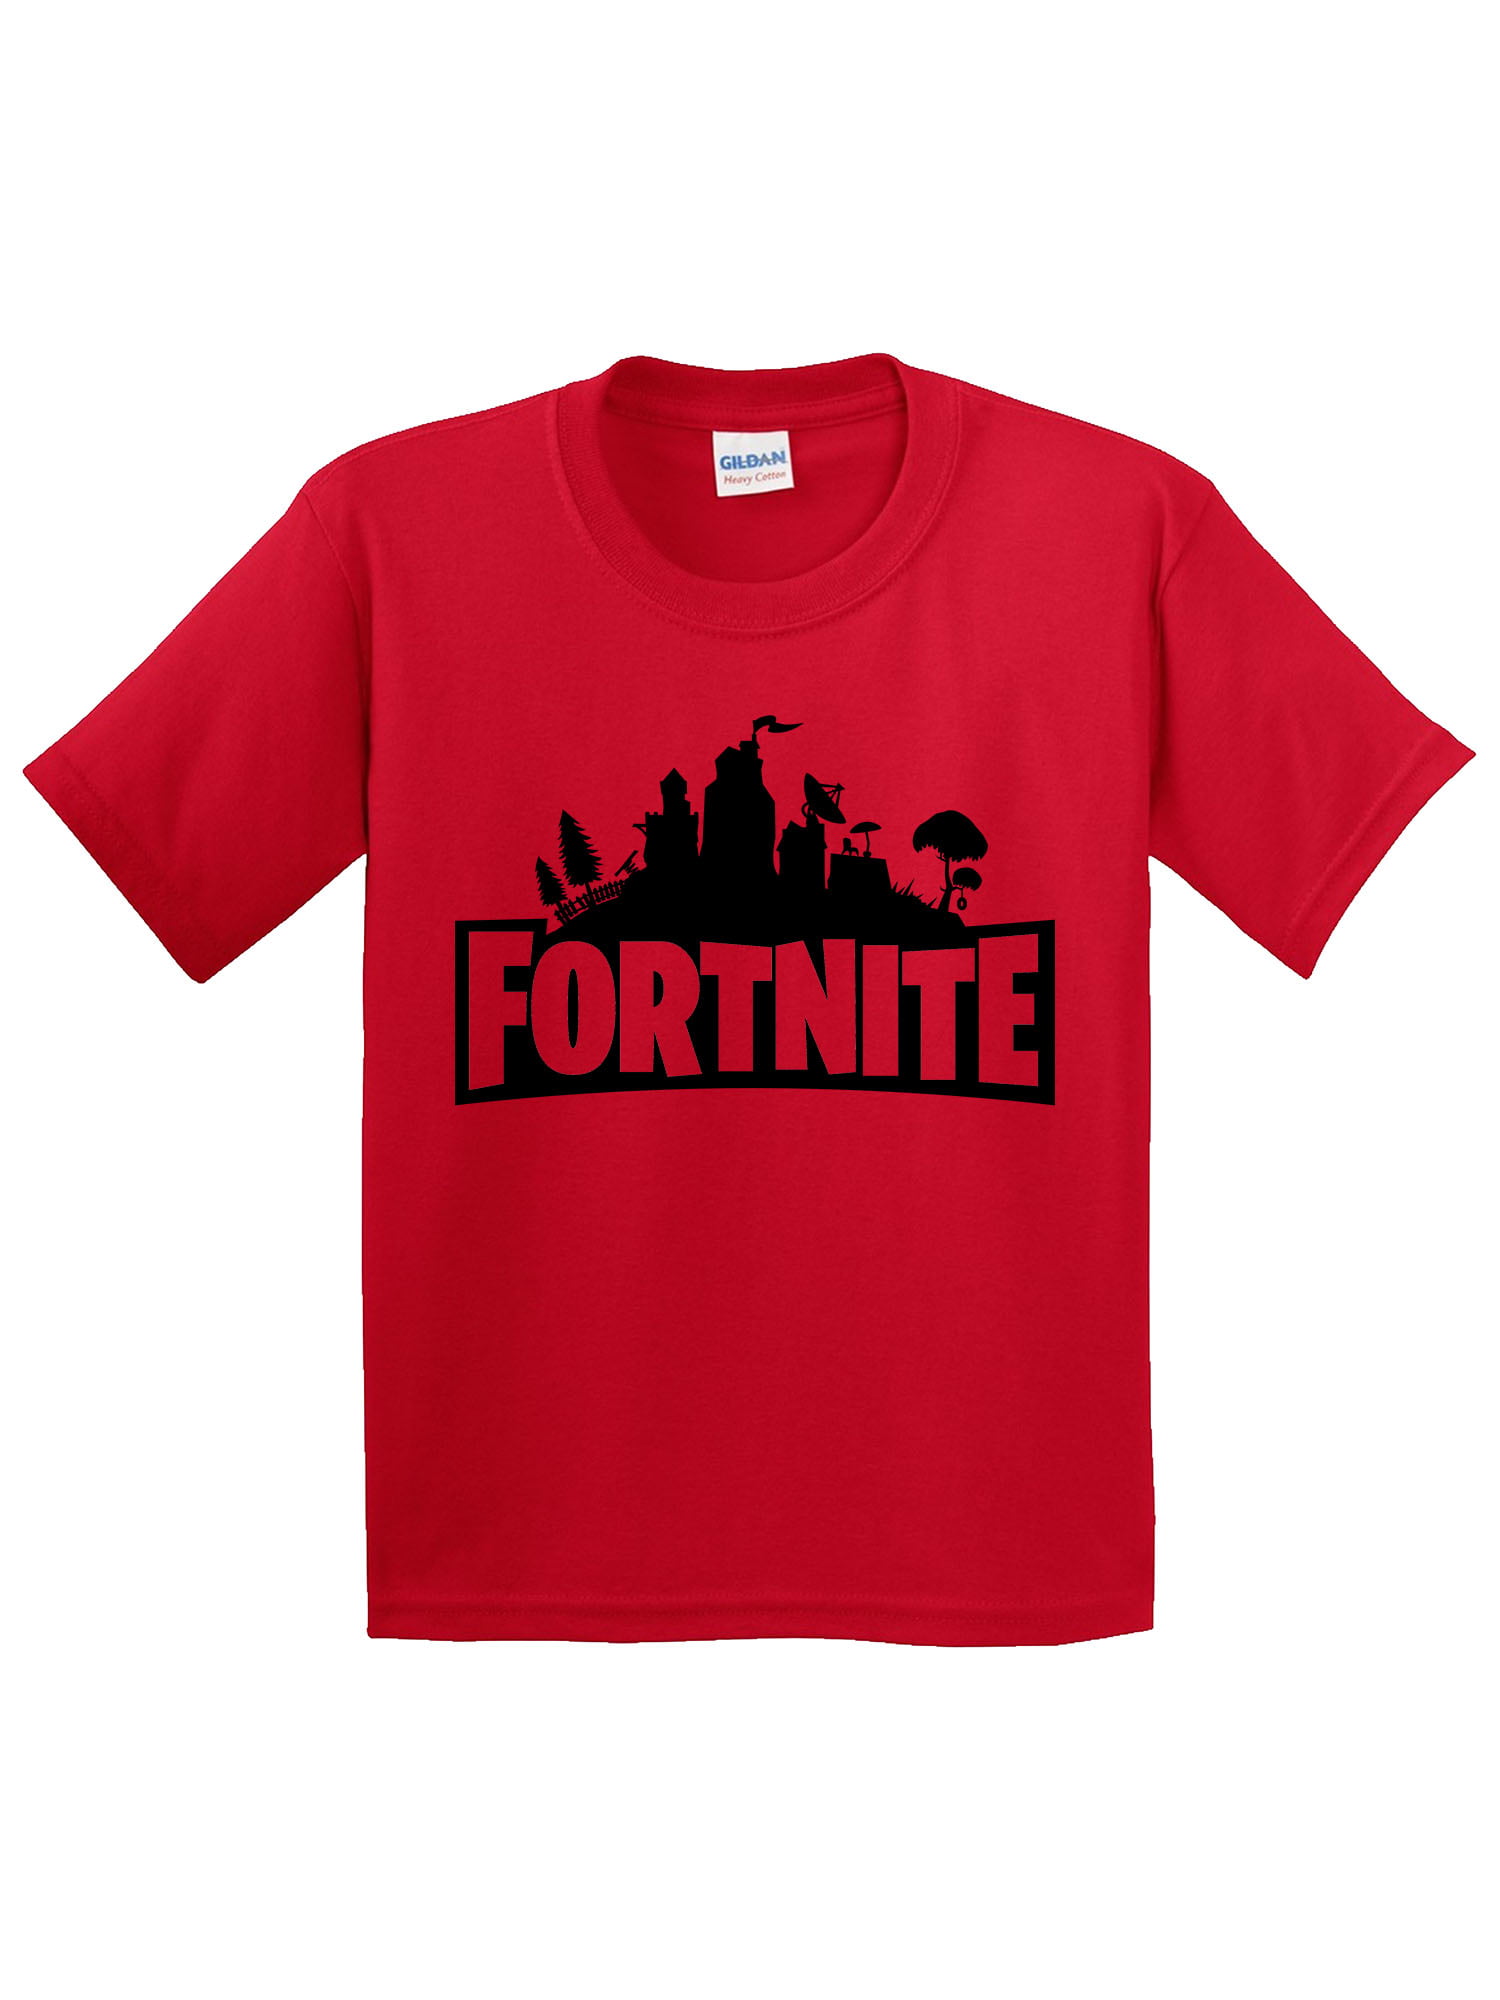 red fortnite shirt